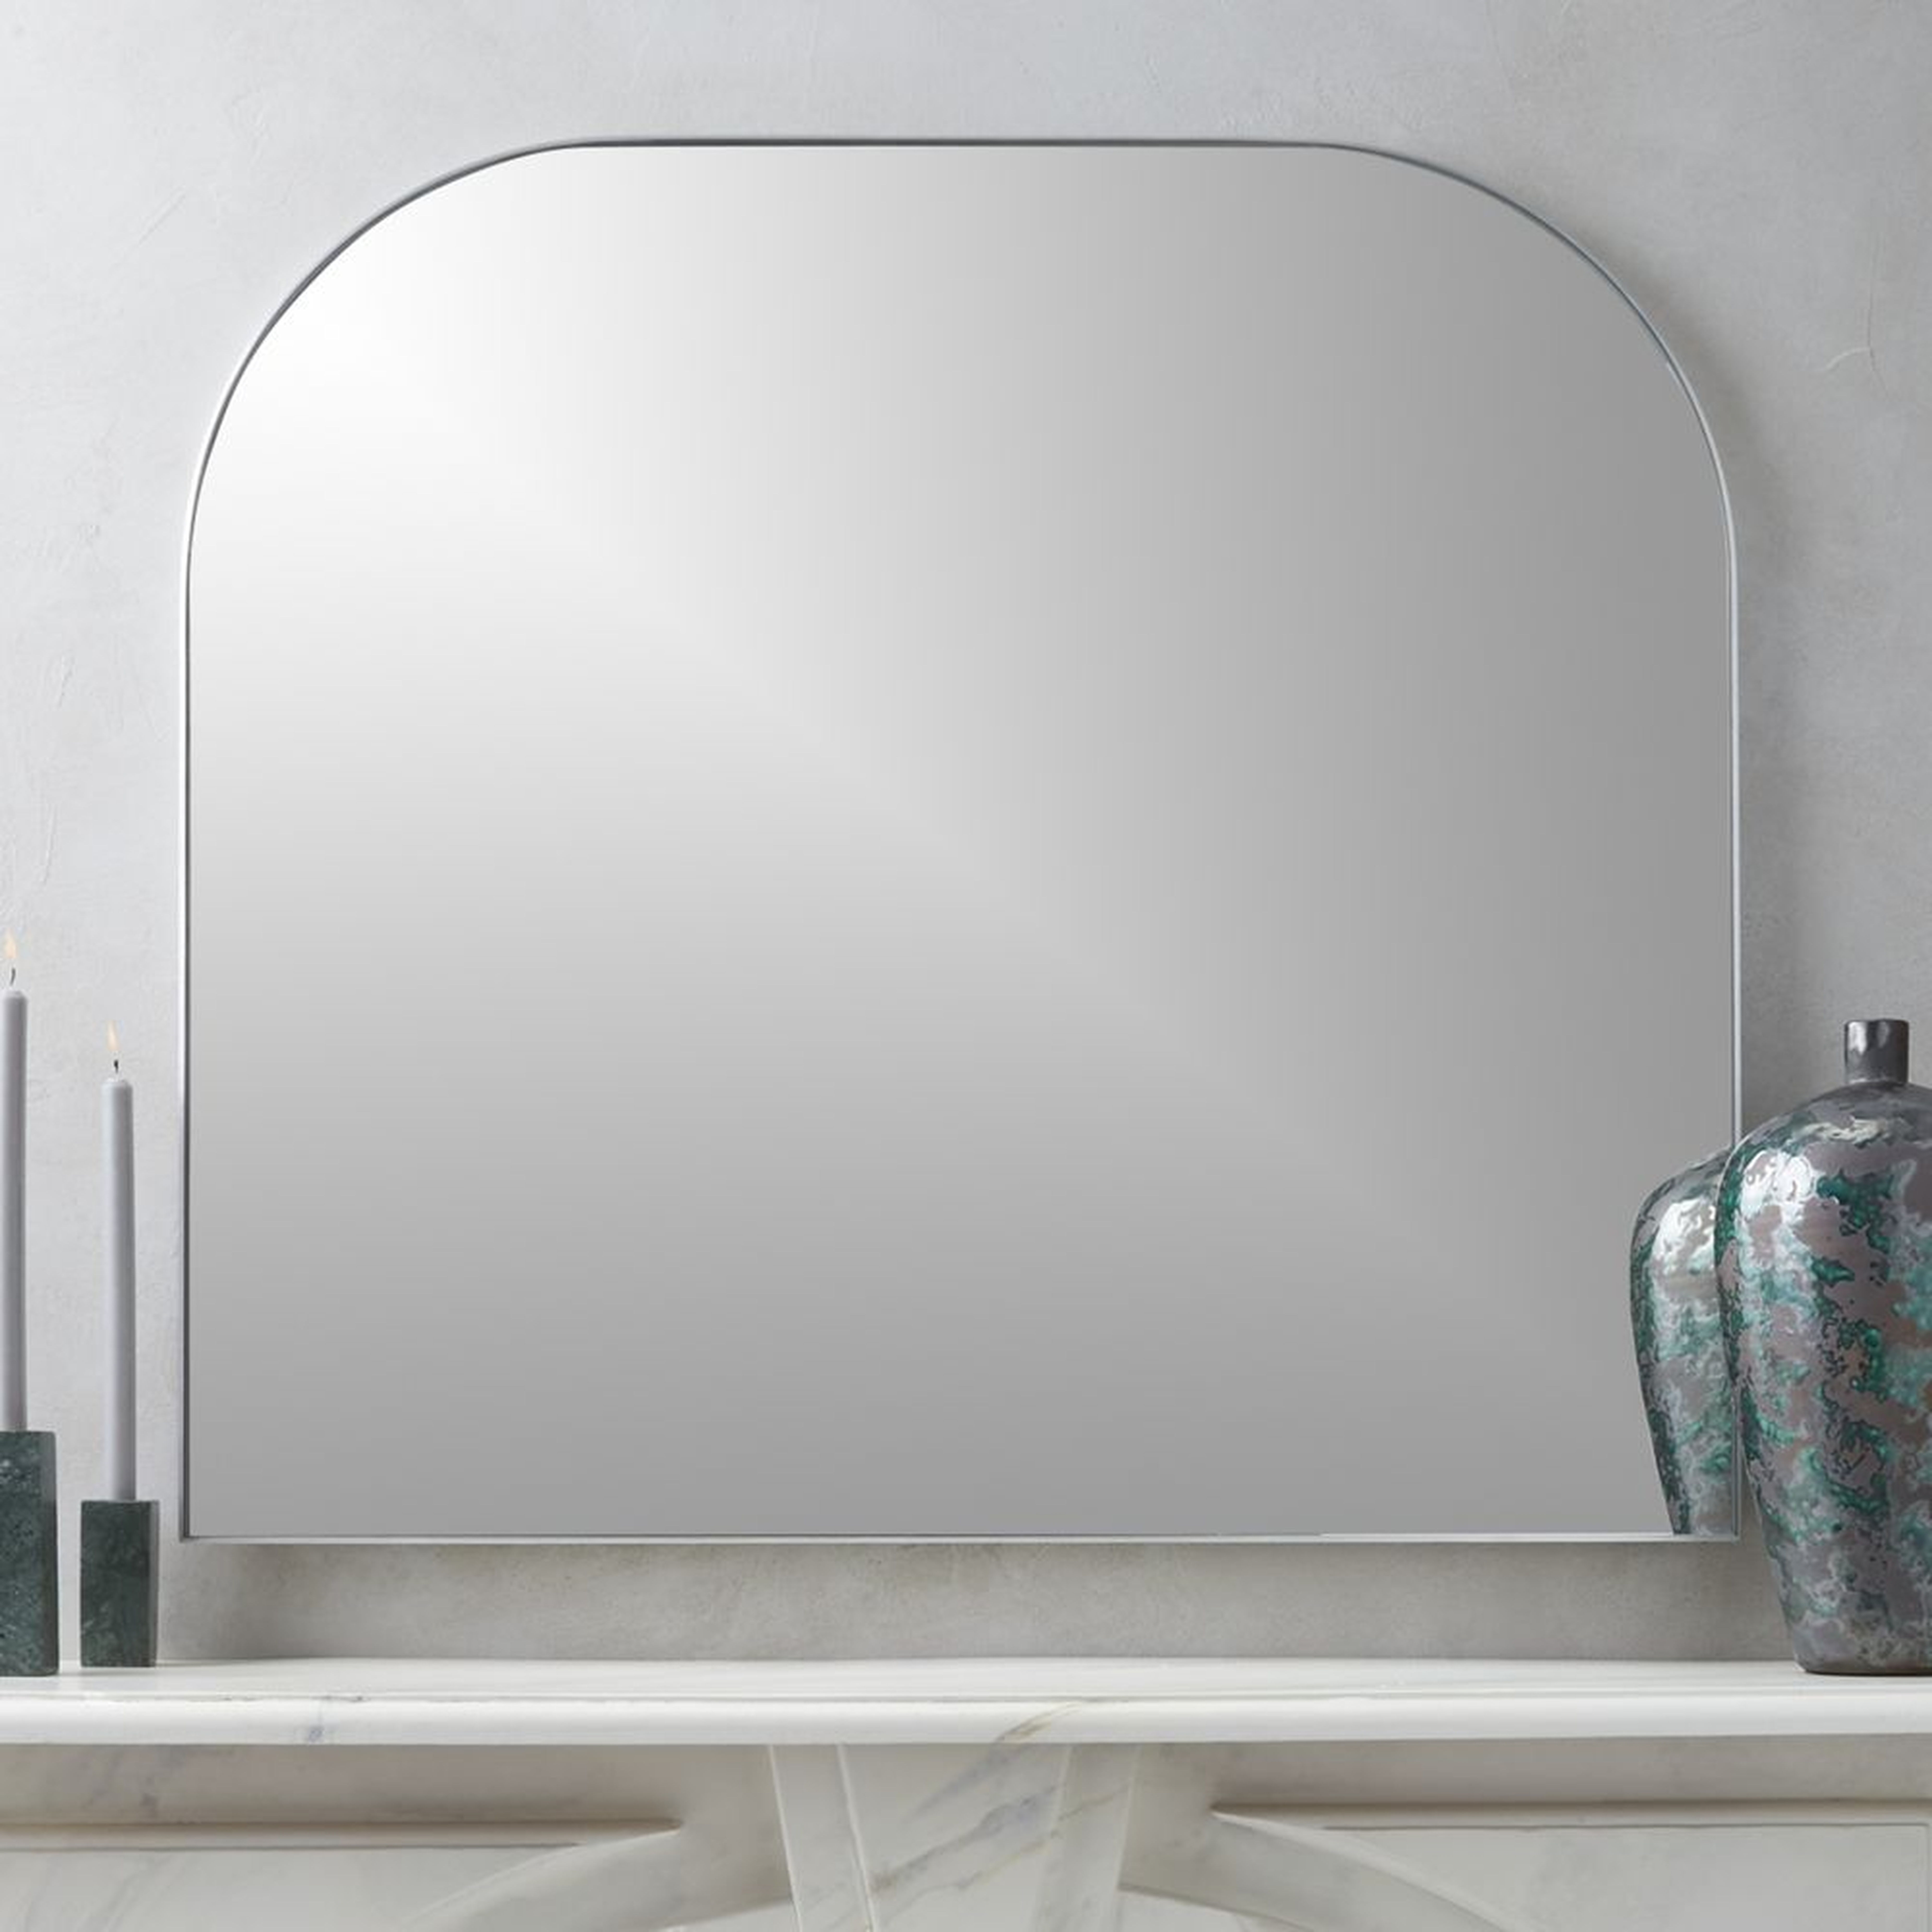 Infinity Silver Mantel Mirror RESTOCK Late April 2022 - CB2